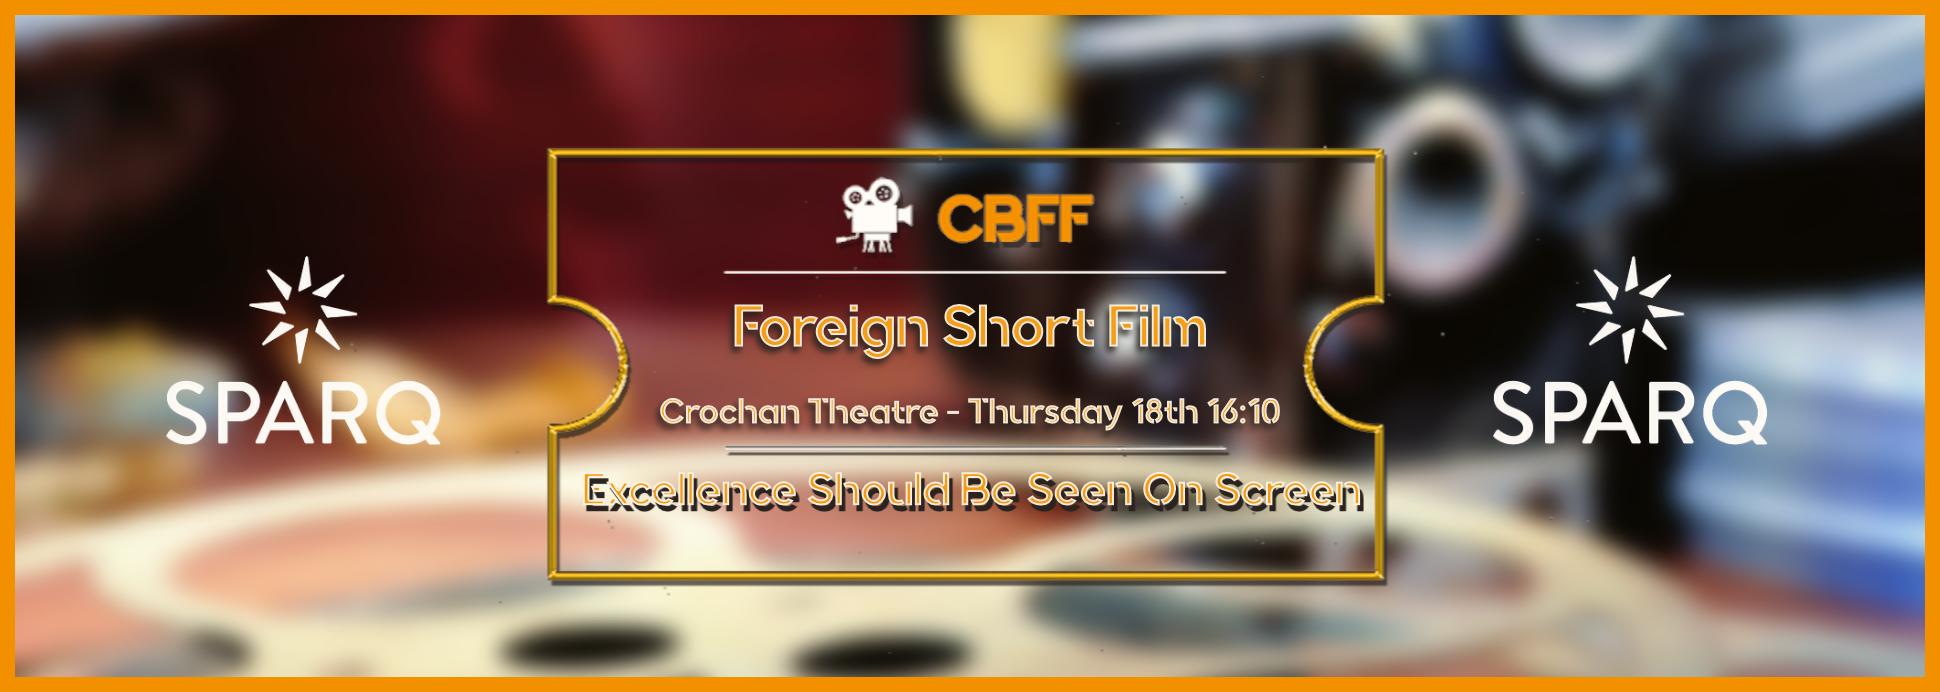 Crochan Theatre - Foreign Short Film 18th 16:10